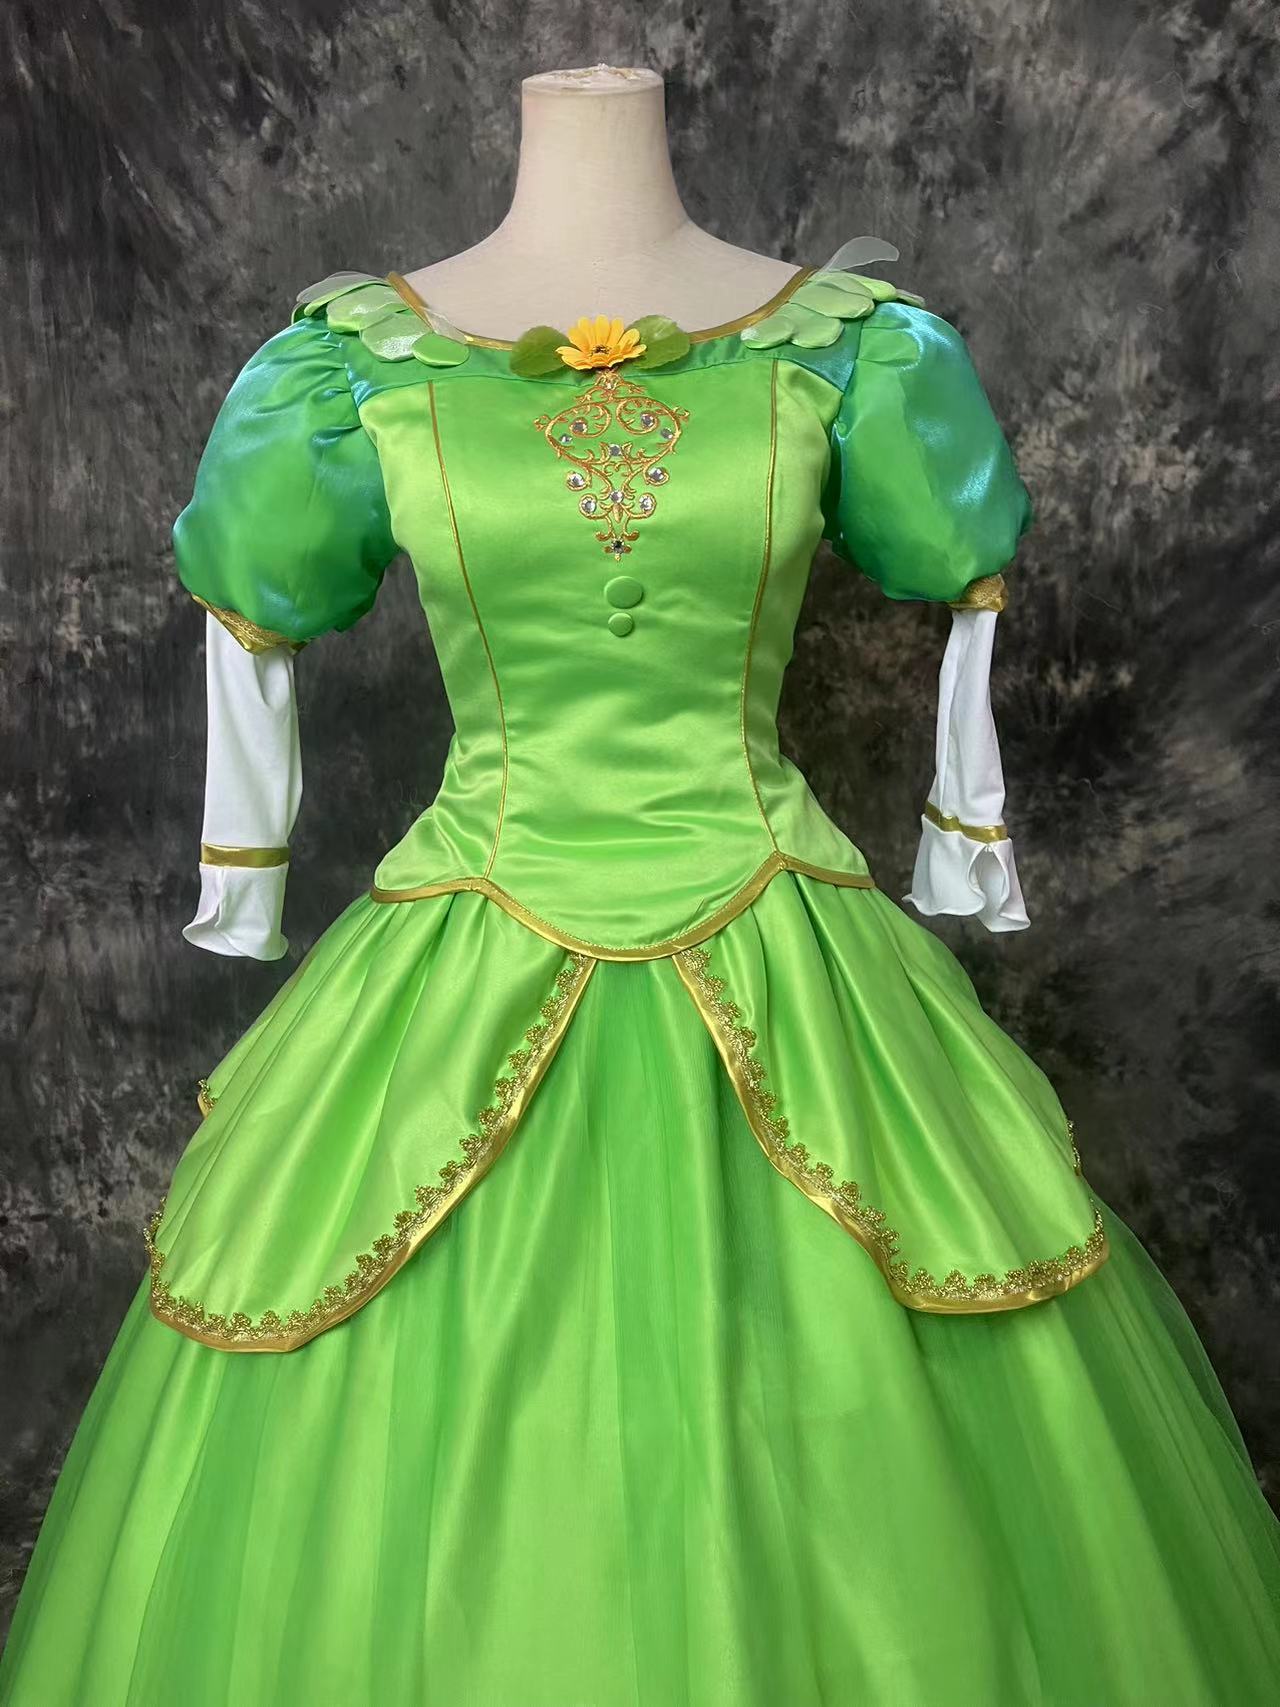 Barbie Princess Dress Cosplay Costume